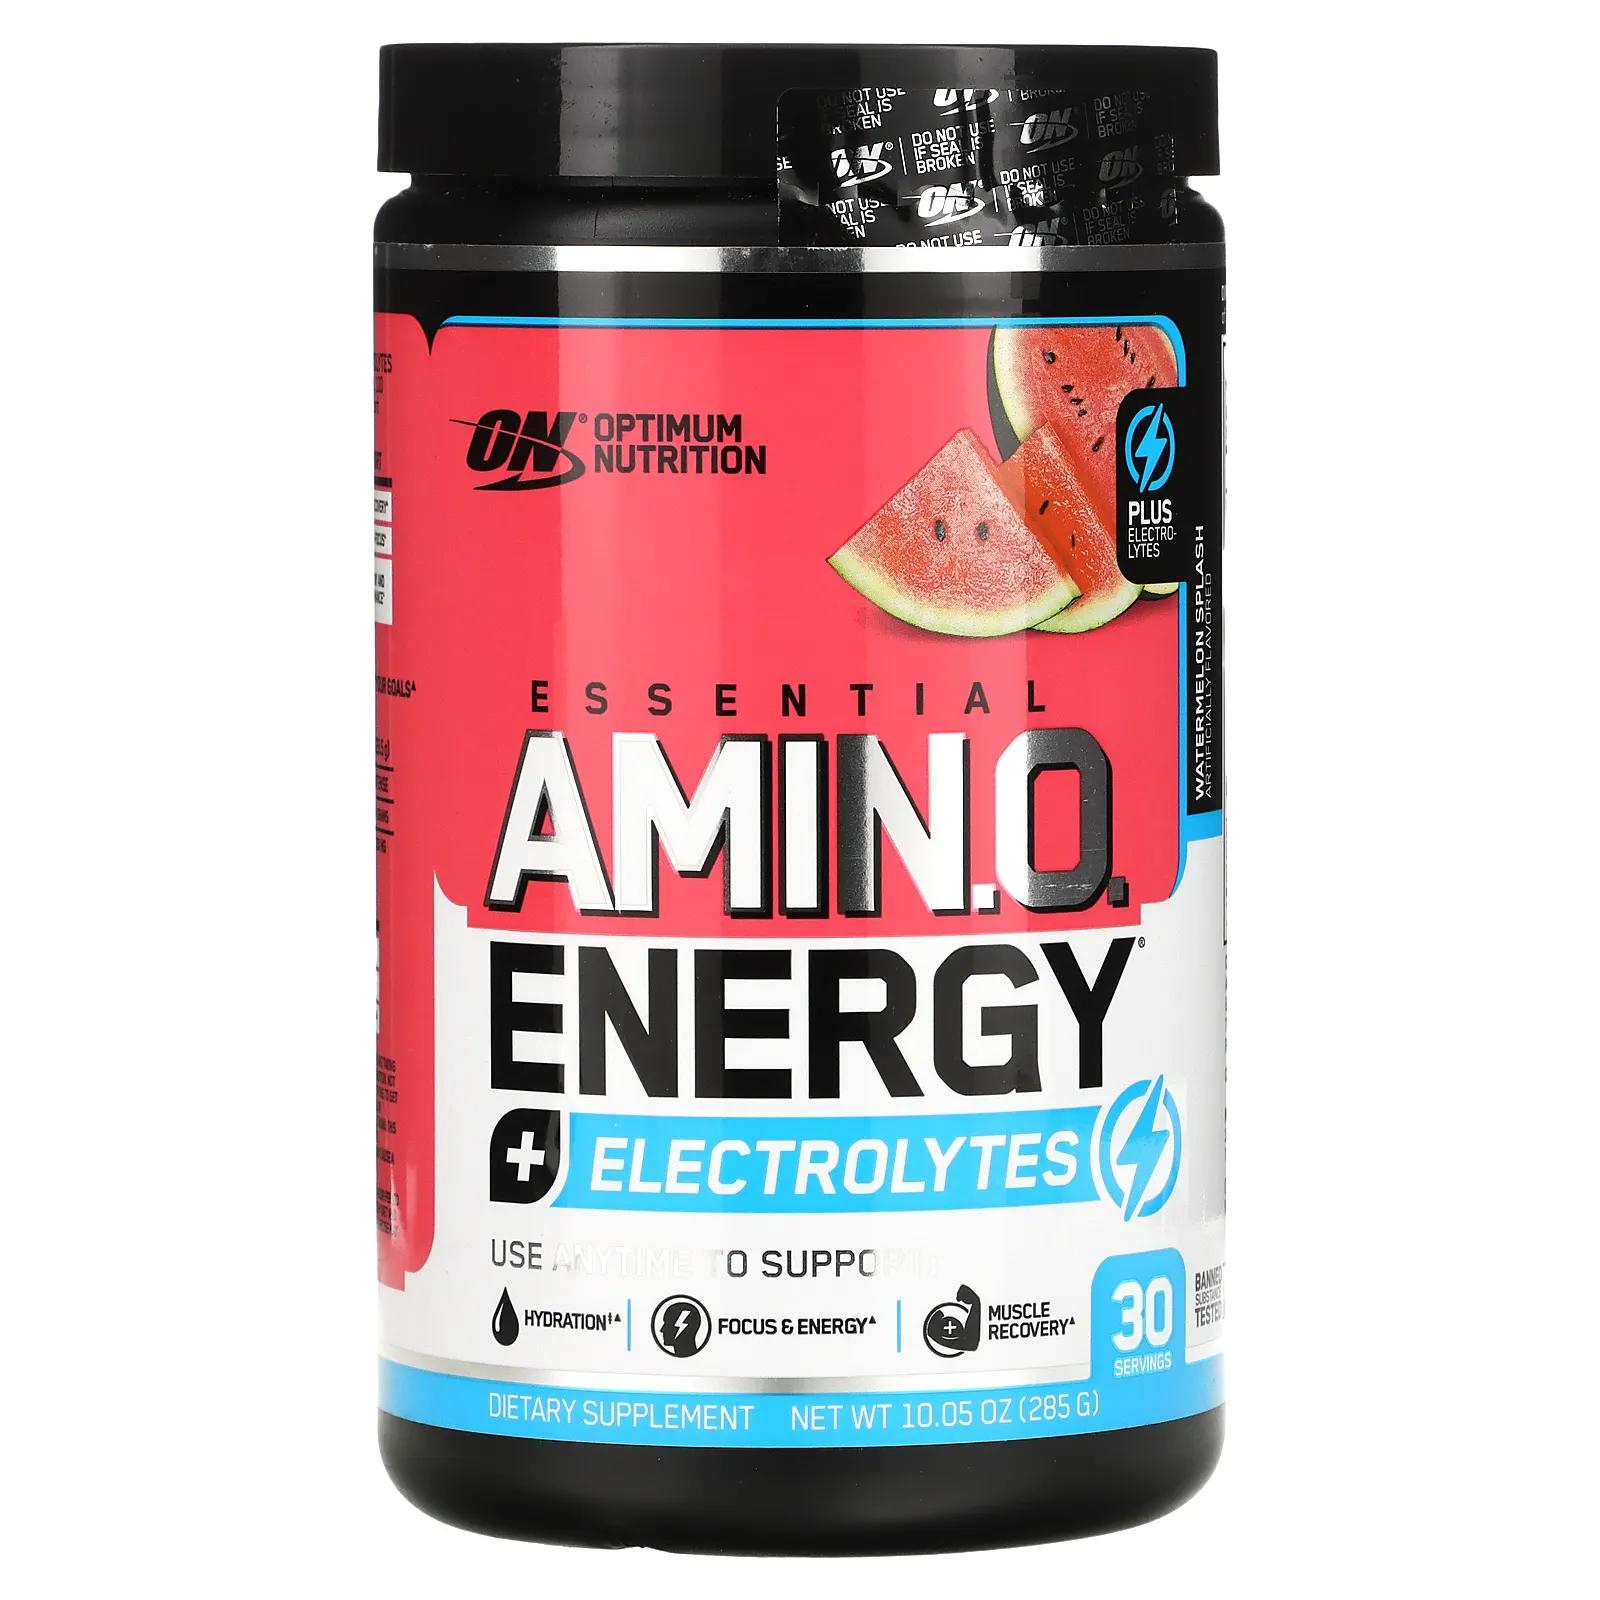 Optimum Nutrition Essential Amino Energy + электролиты арбузный взрыв 10,05 унц. (285 г) optimum nutrition creatine 2500 мг 300 кап